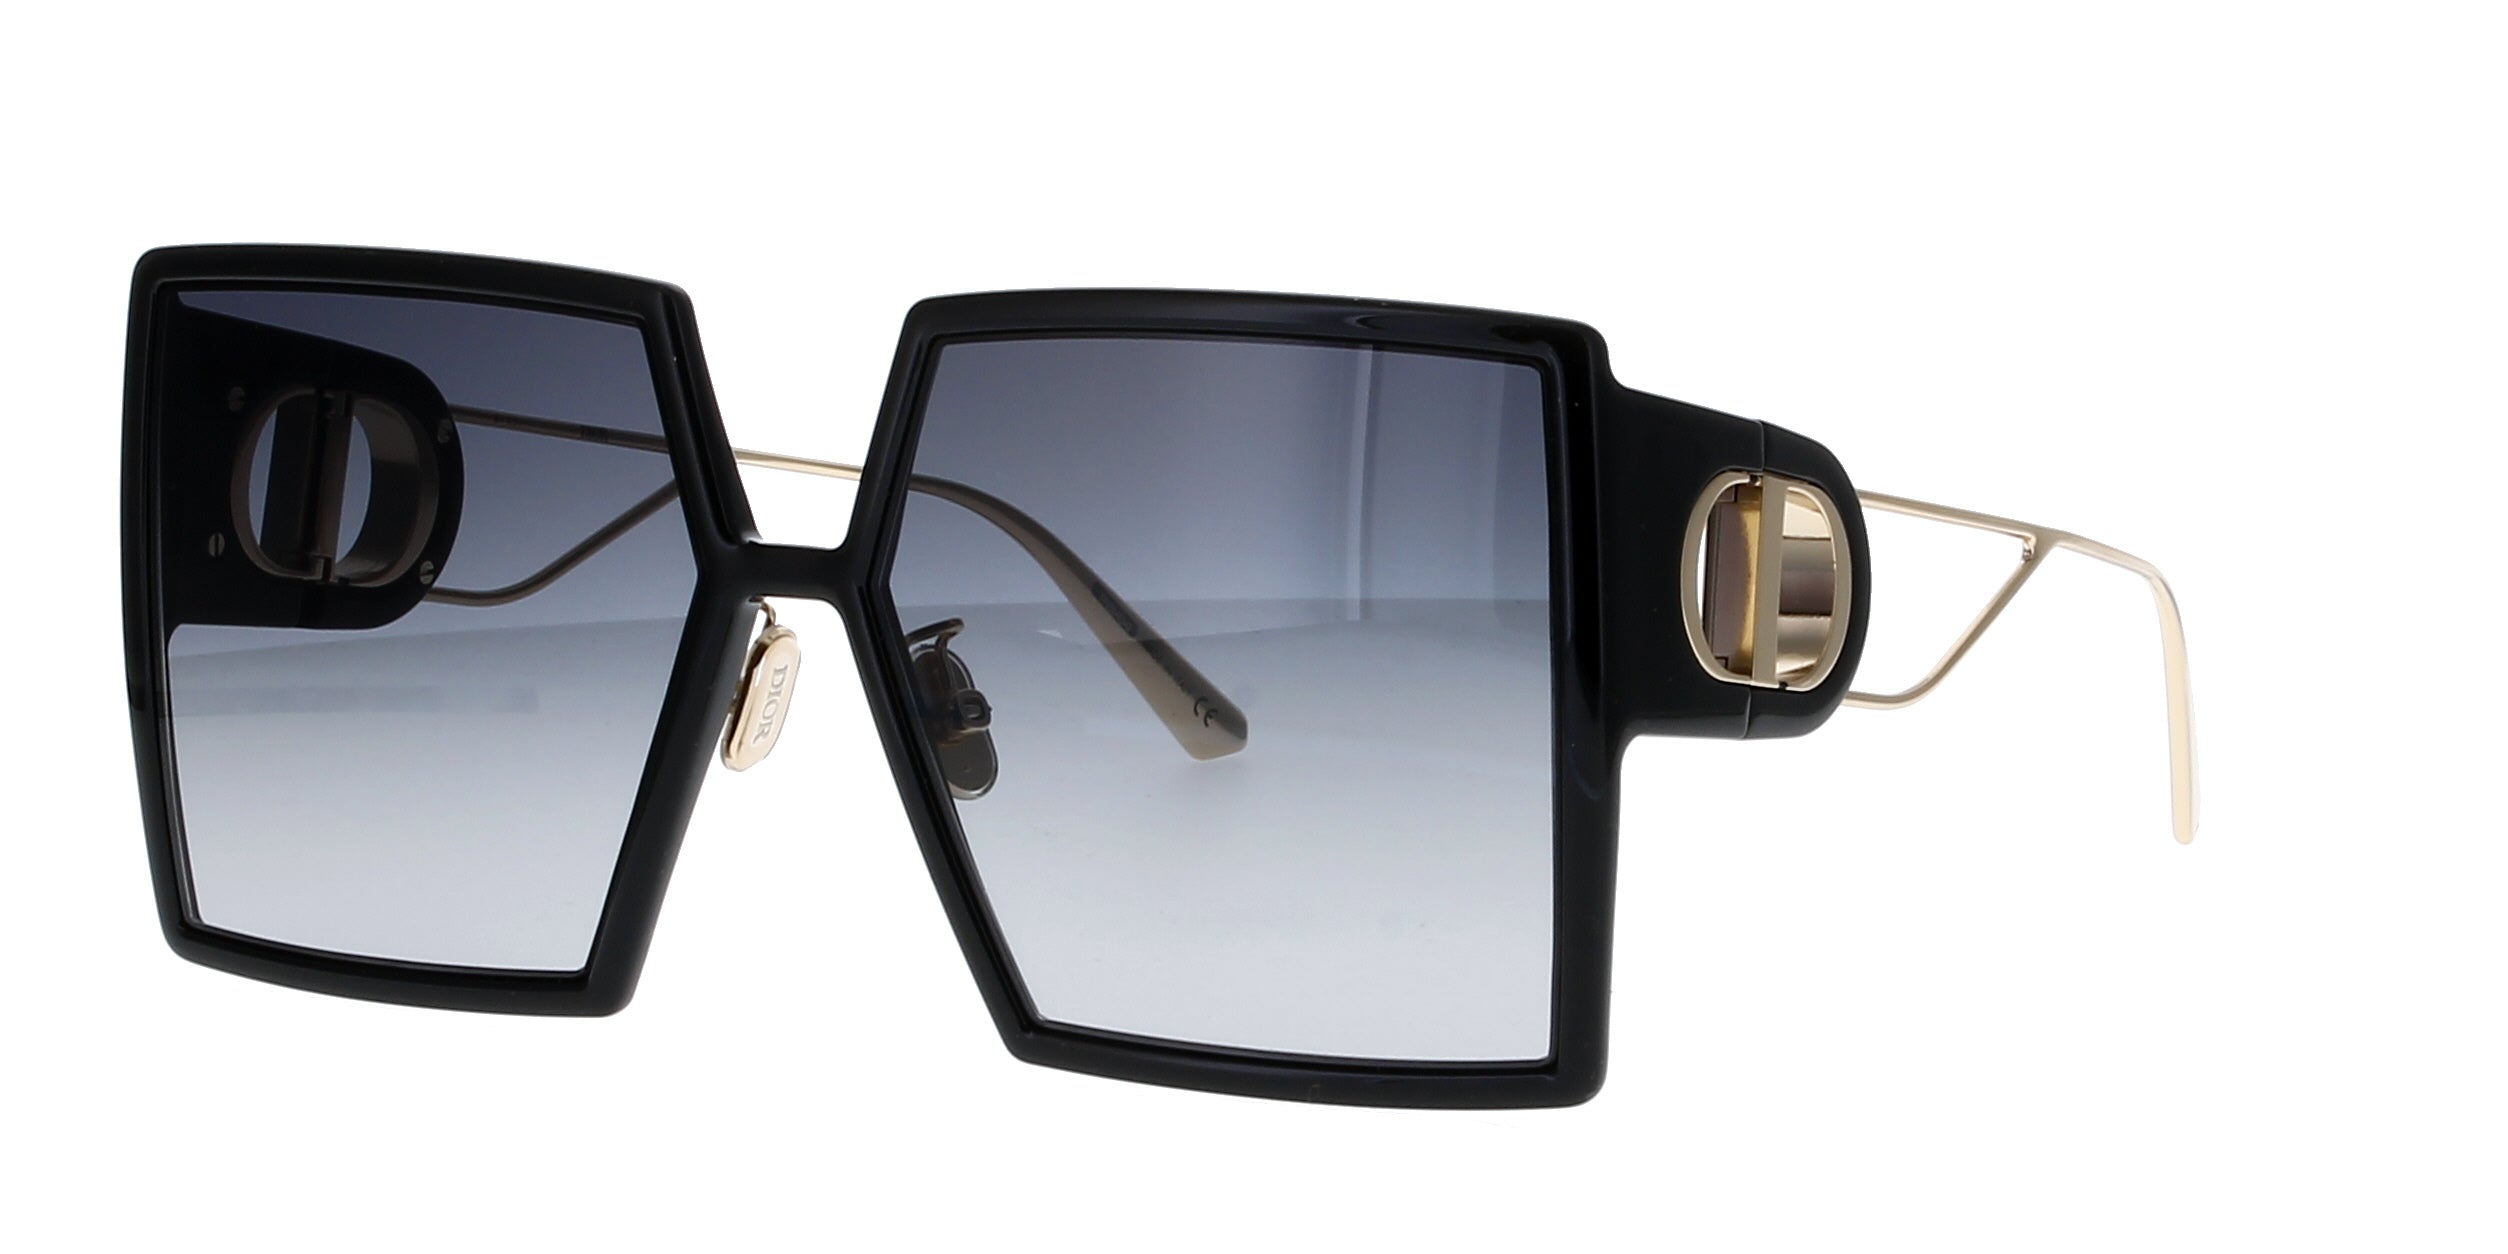 Share 278+ the new dior sunglasses super hot